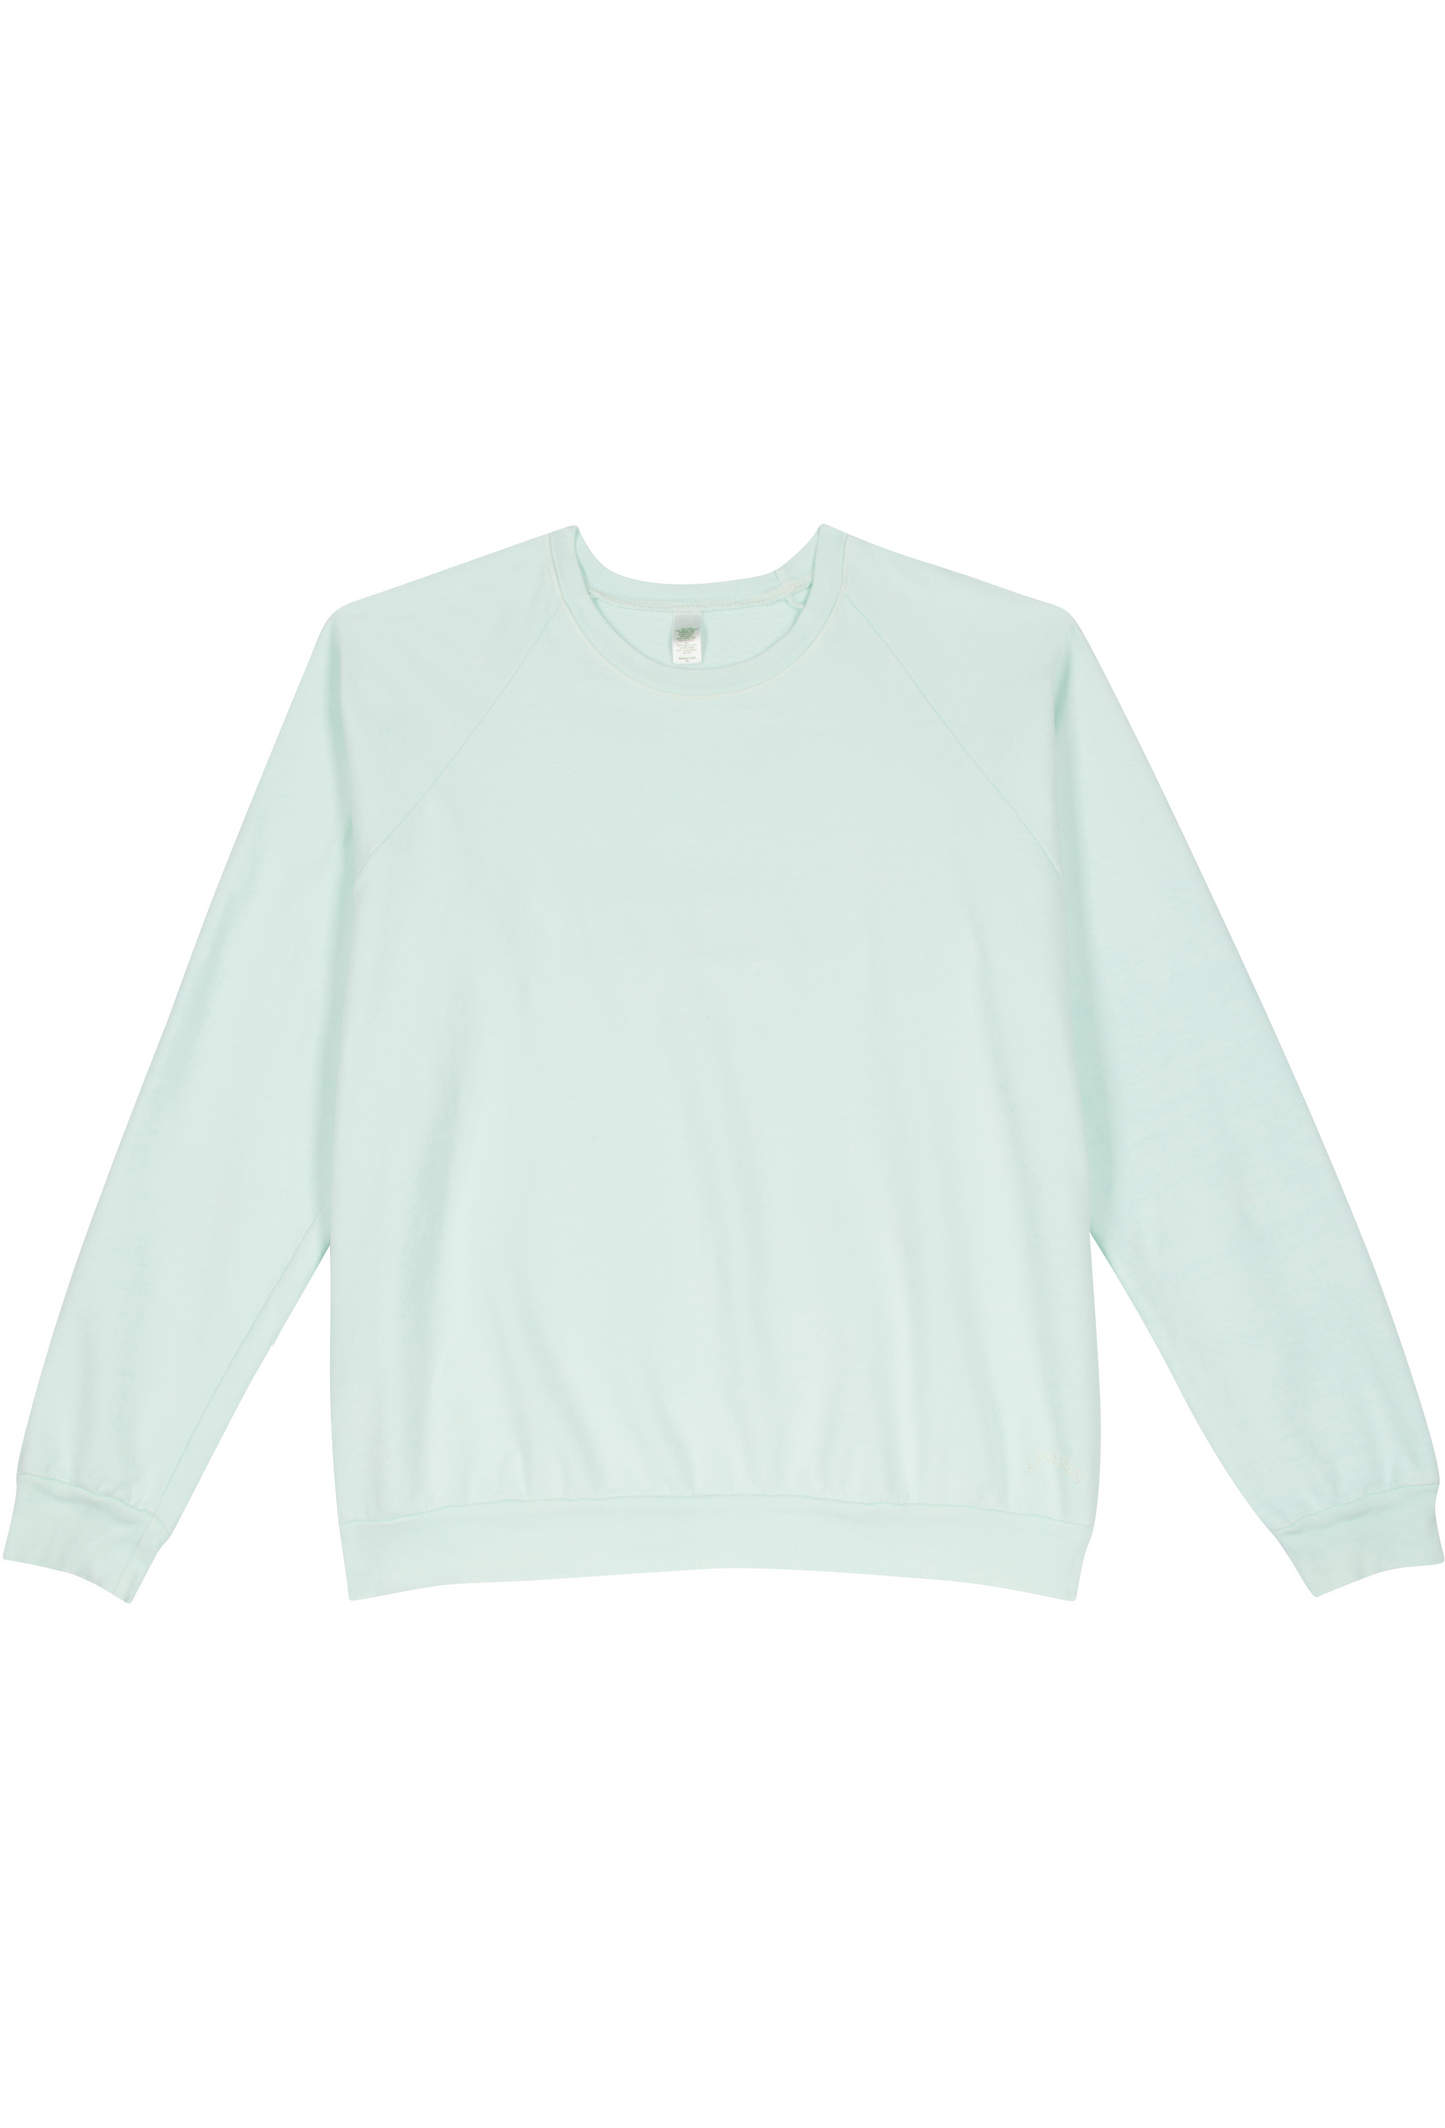 Retro Raglan Gym Sweatshirt - Organic Cotton Hand-Dye - Aloe Green - J. Marin